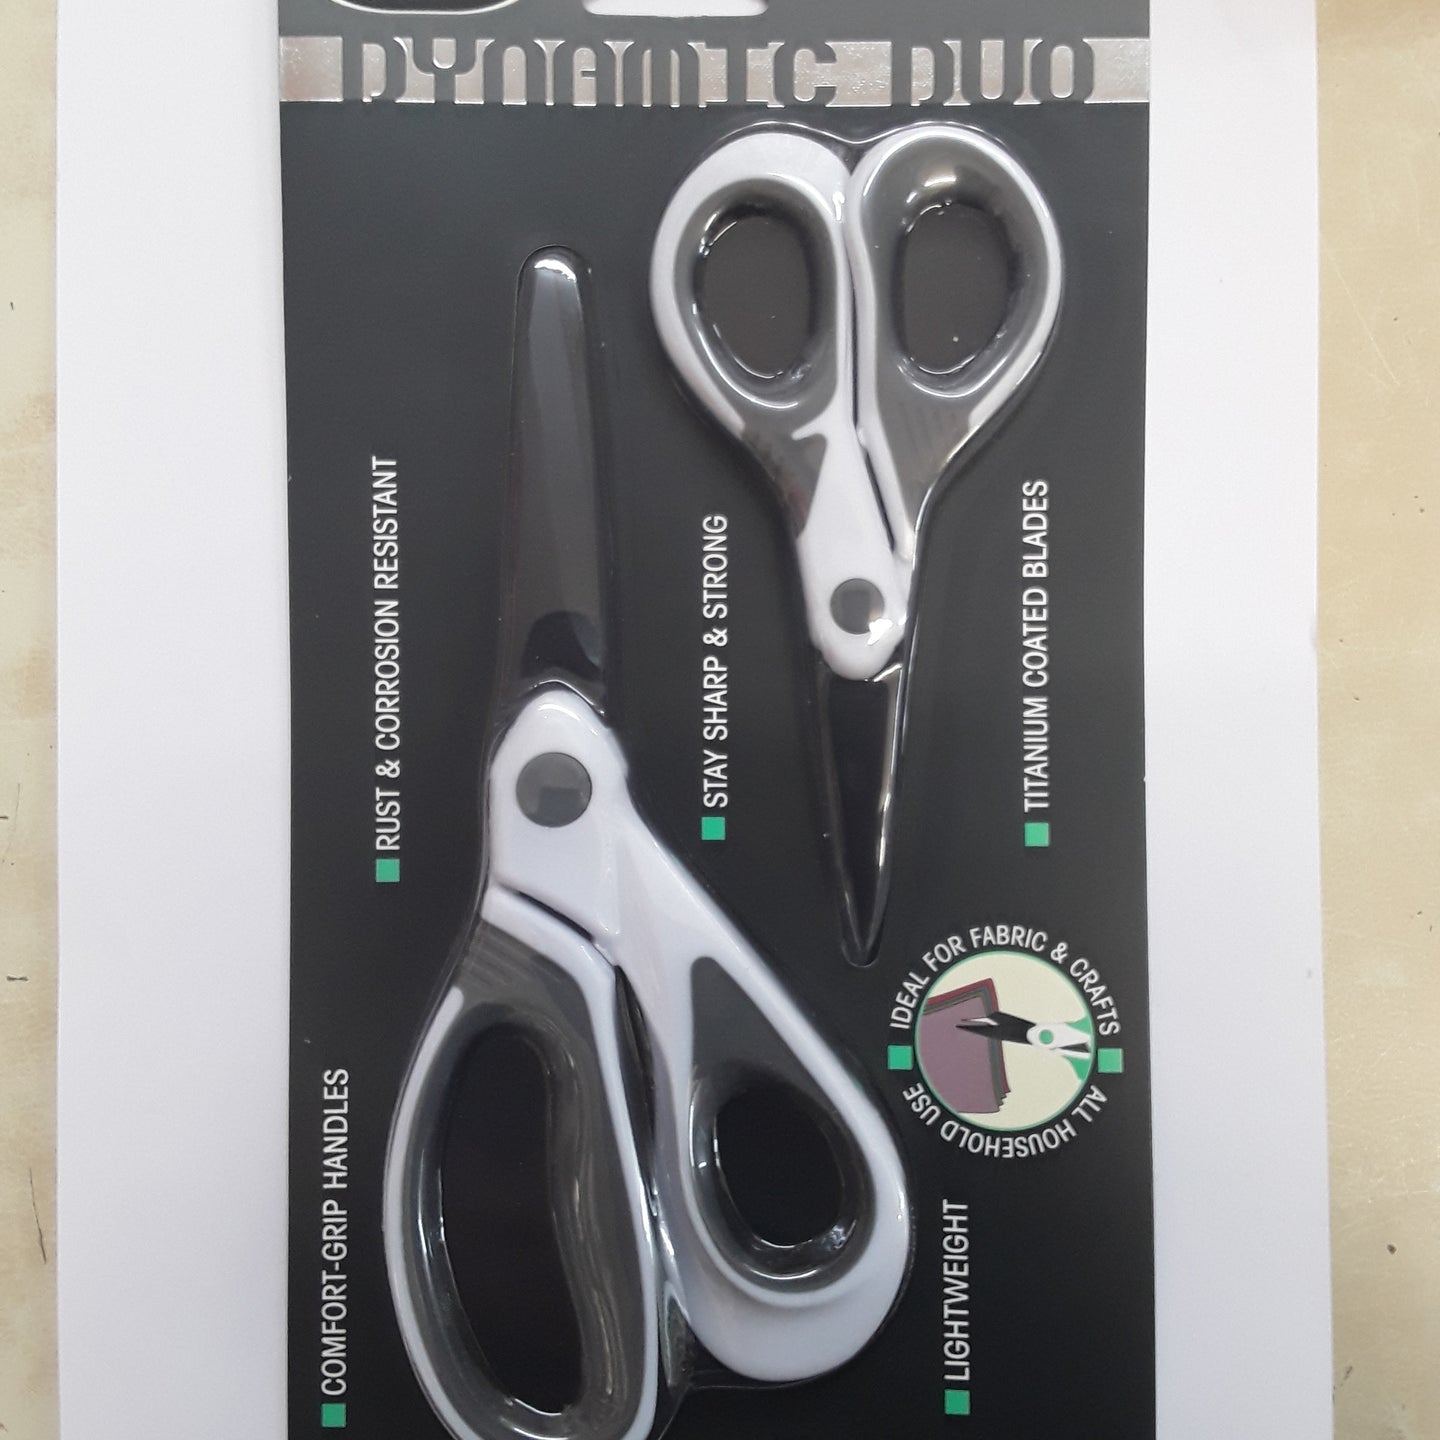 Triumph Quality Dynamic Duo Scissors